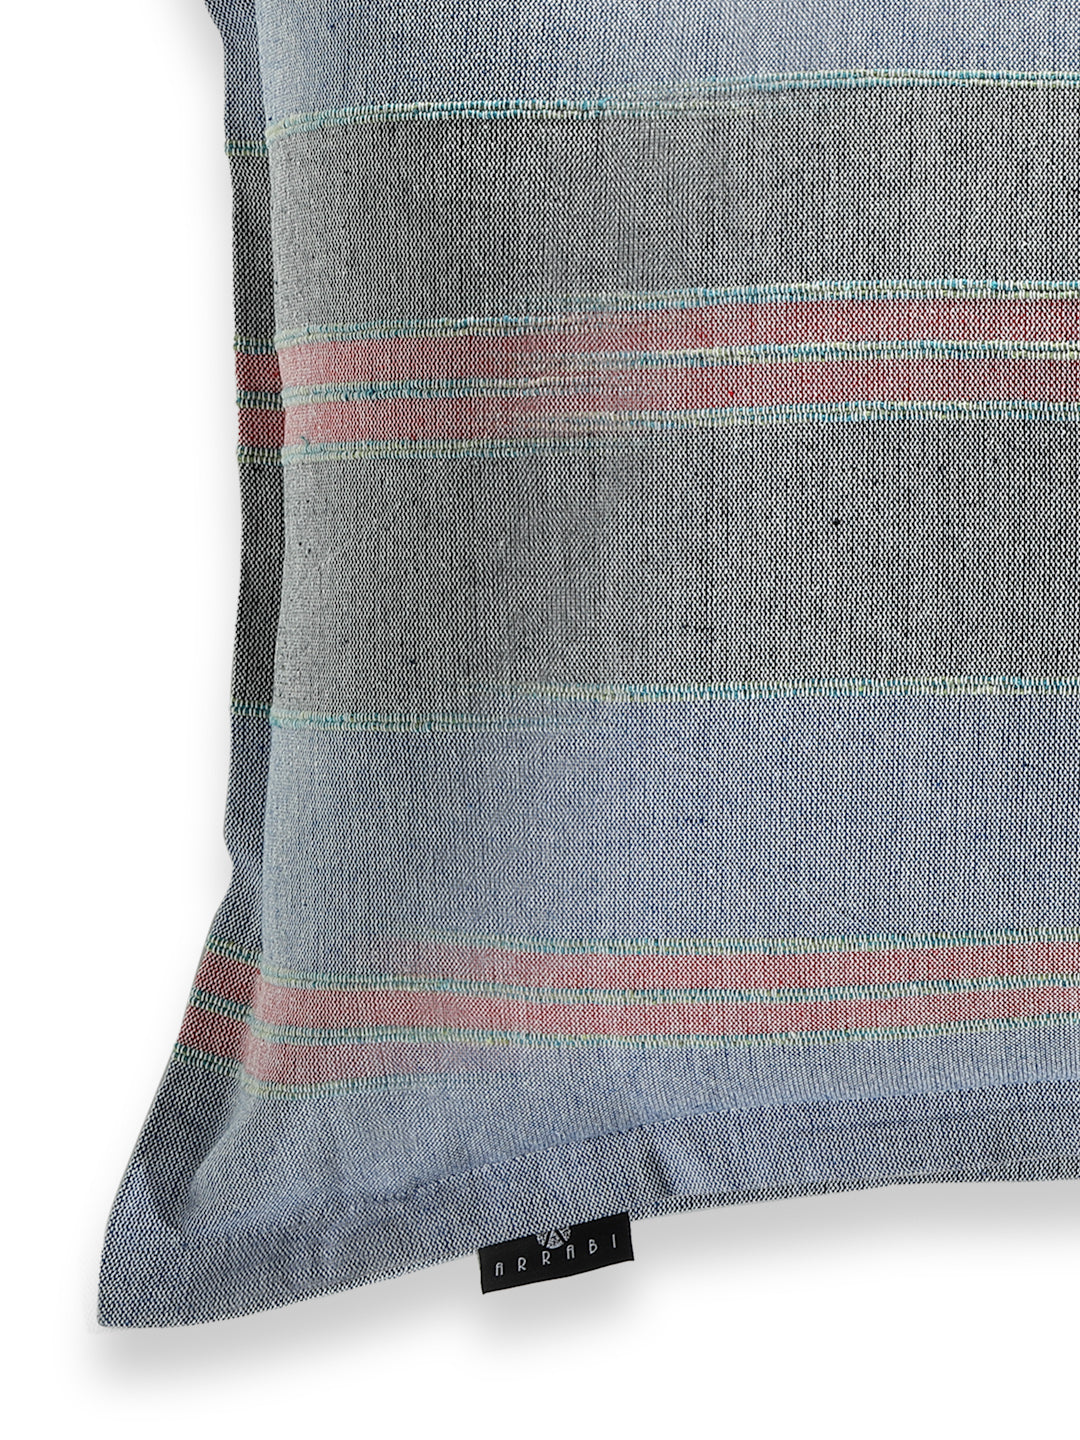 Arrabi Multi Striped Handwoven Cotton Set of 2 Pillow Covers (70 x 45 cm)